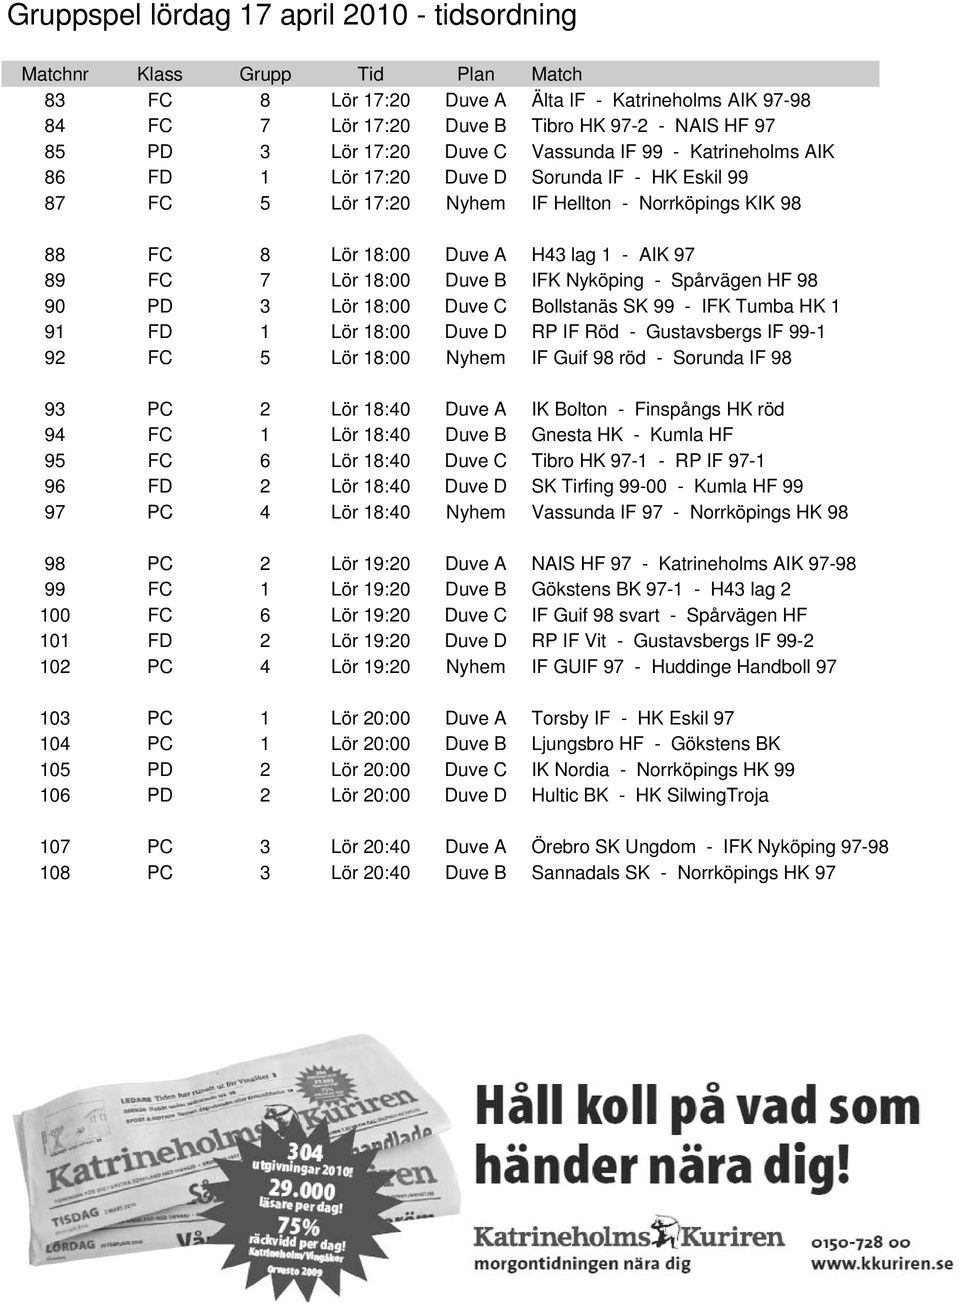 97 89 FC 7 Lör 18:00 Duve B IFK Nyköping - Spårvägen HF 98 90 PD 3 Lör 18:00 Duve C Bollstanäs SK 99 - IFK Tumba HK 1 91 FD 1 Lör 18:00 Duve D RP IF Röd - Gustavsbergs IF 99-1 92 FC 5 Lör 18:00 Nyhem